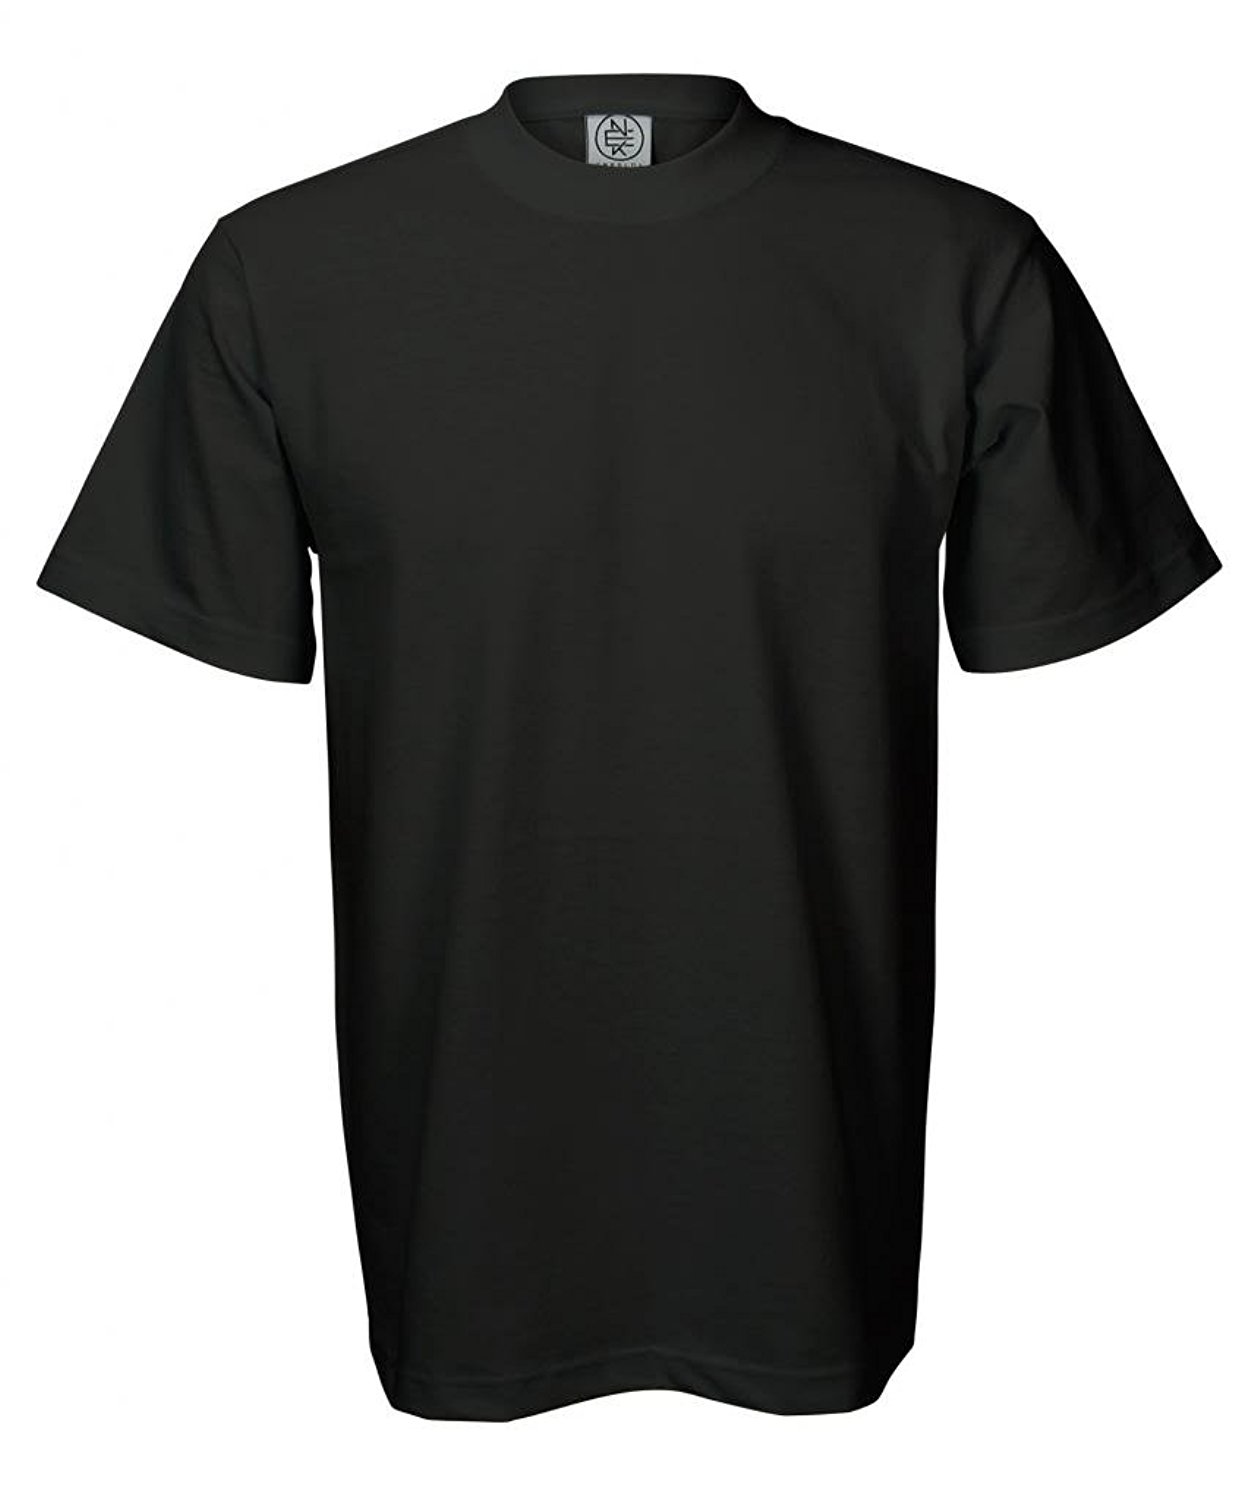 Amazon.com: Enkalda Men's Premium Heavyweight T-Shirt: Clothing